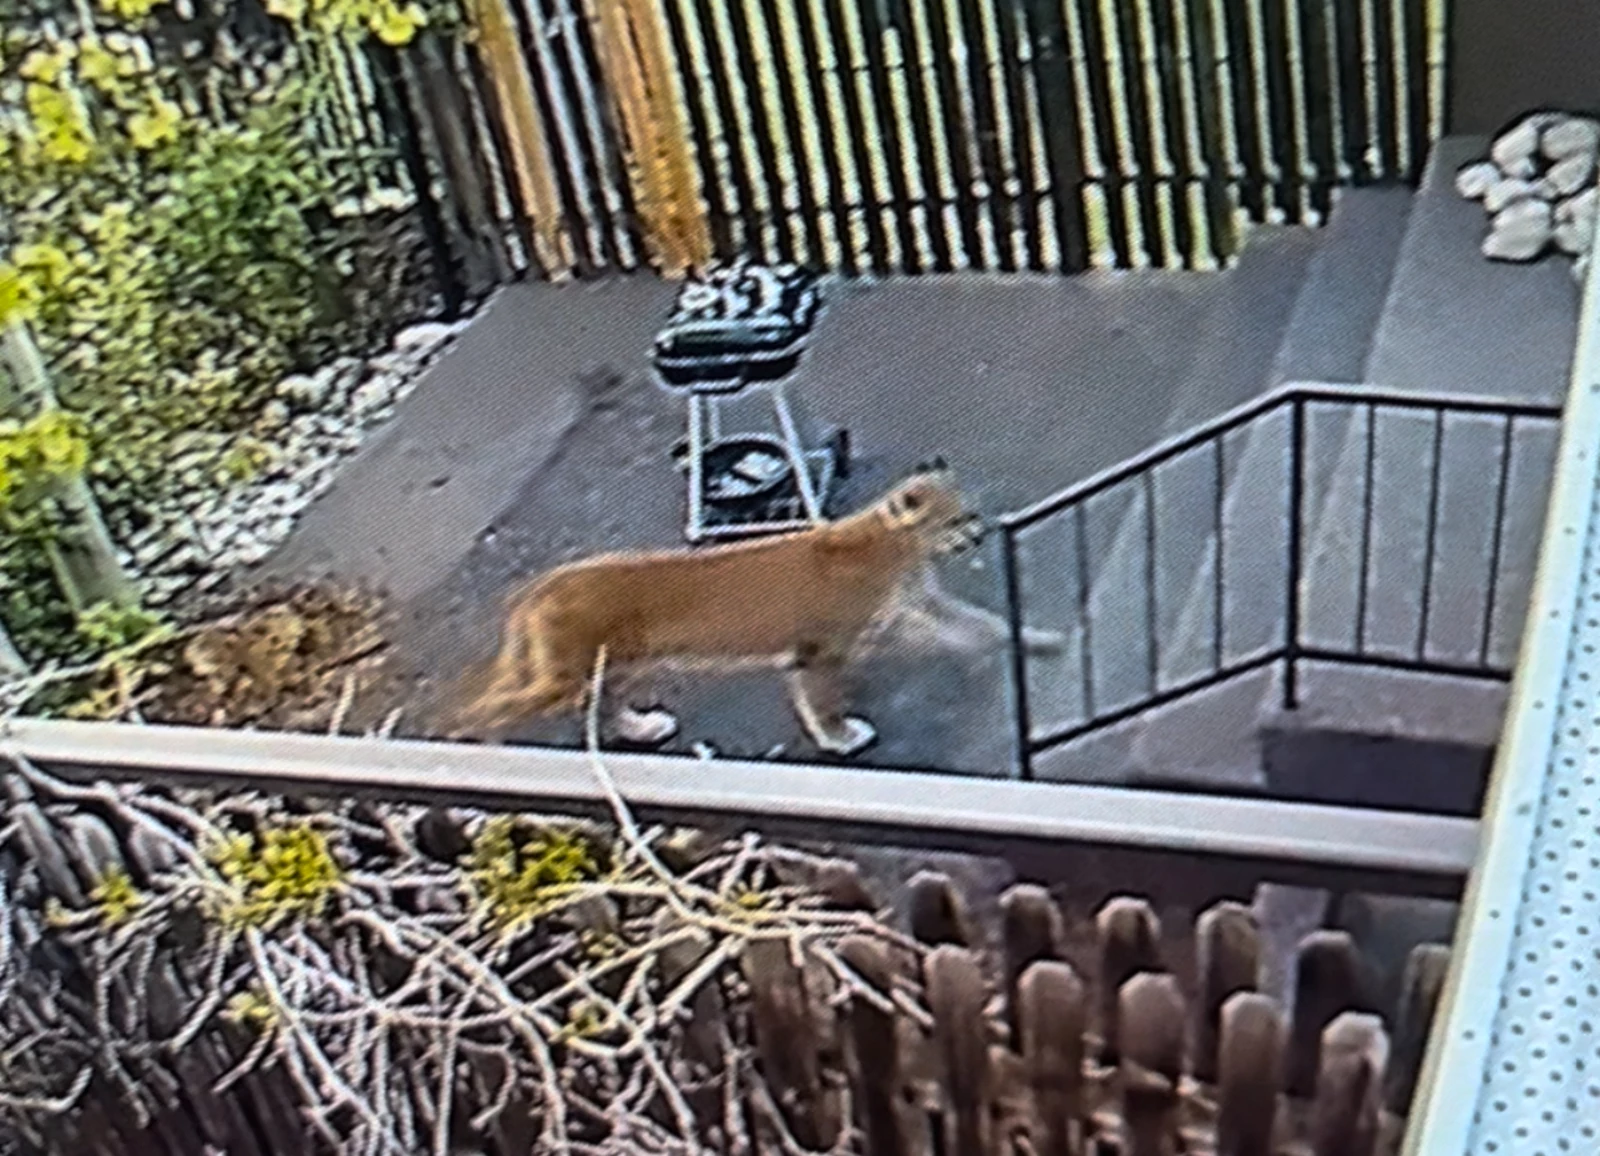 Bobcat caught on trap-camera in far northern NJ, March 2019 : r/newjersey